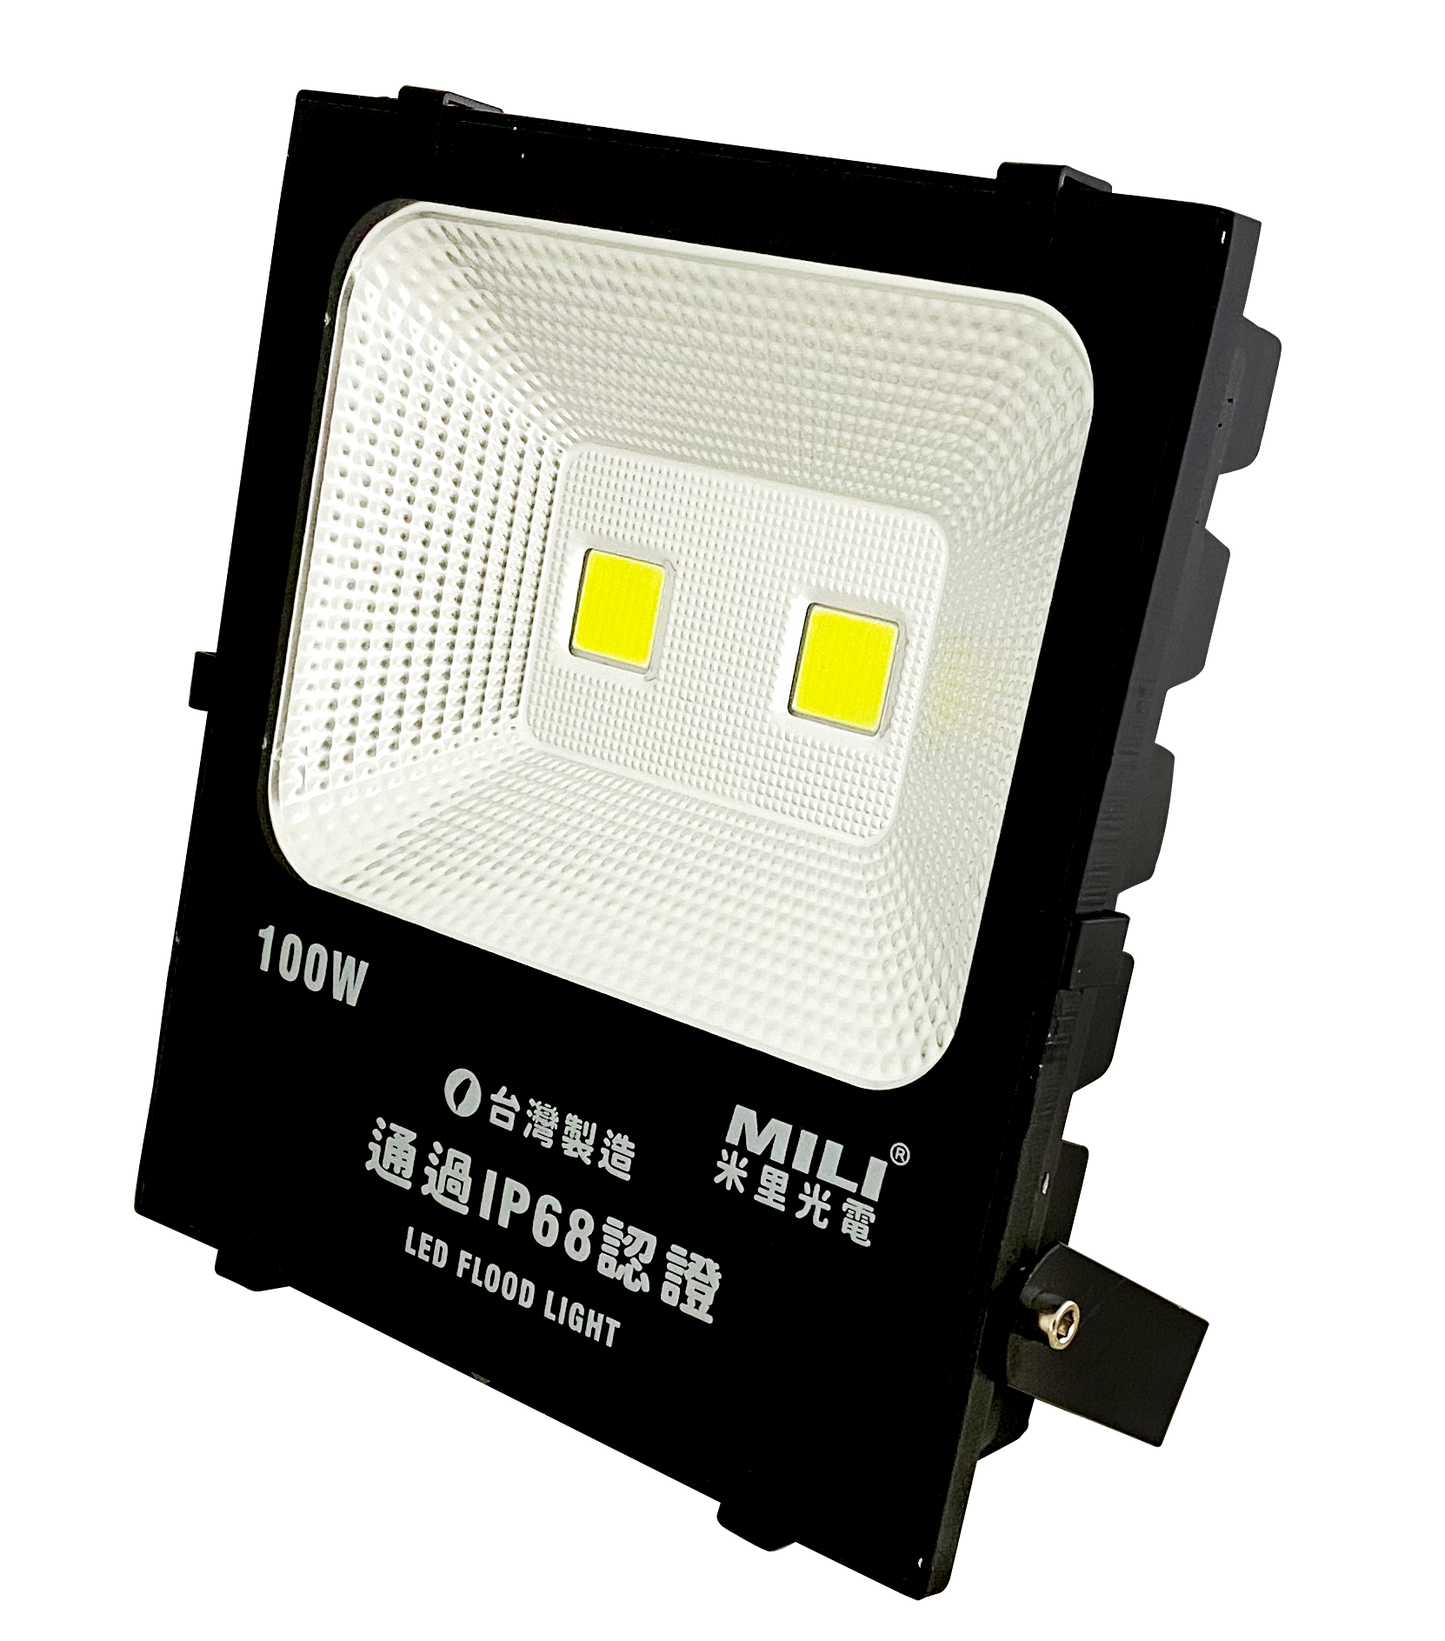 LED 100W COB超薄投光燈(台灣製造/IP68)